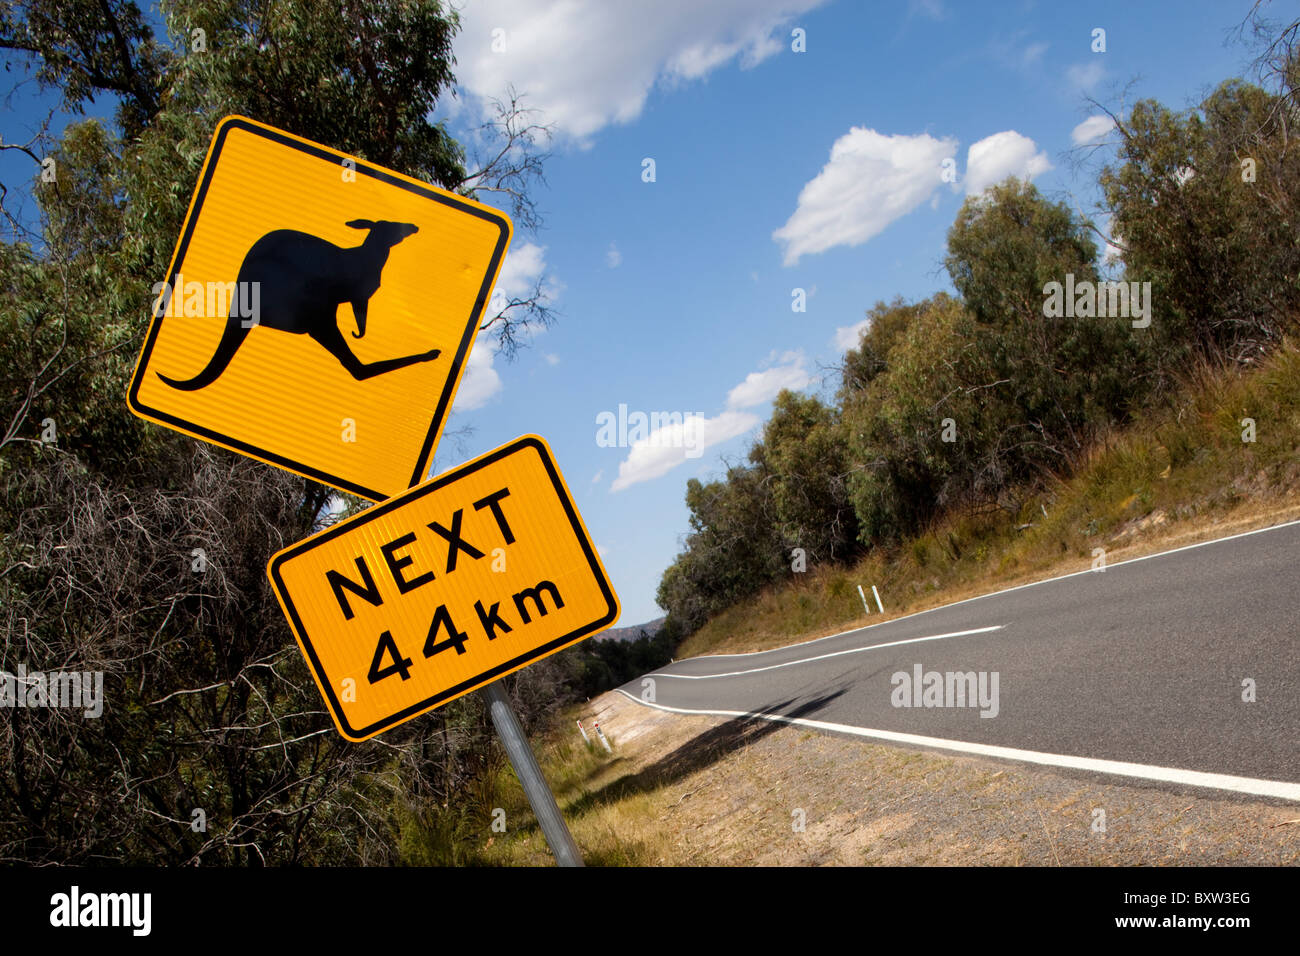 Australien, Victoria, Grampians National Park, Kangaroo Crossing Straße Warnschild entlang Landstraße Stockfoto